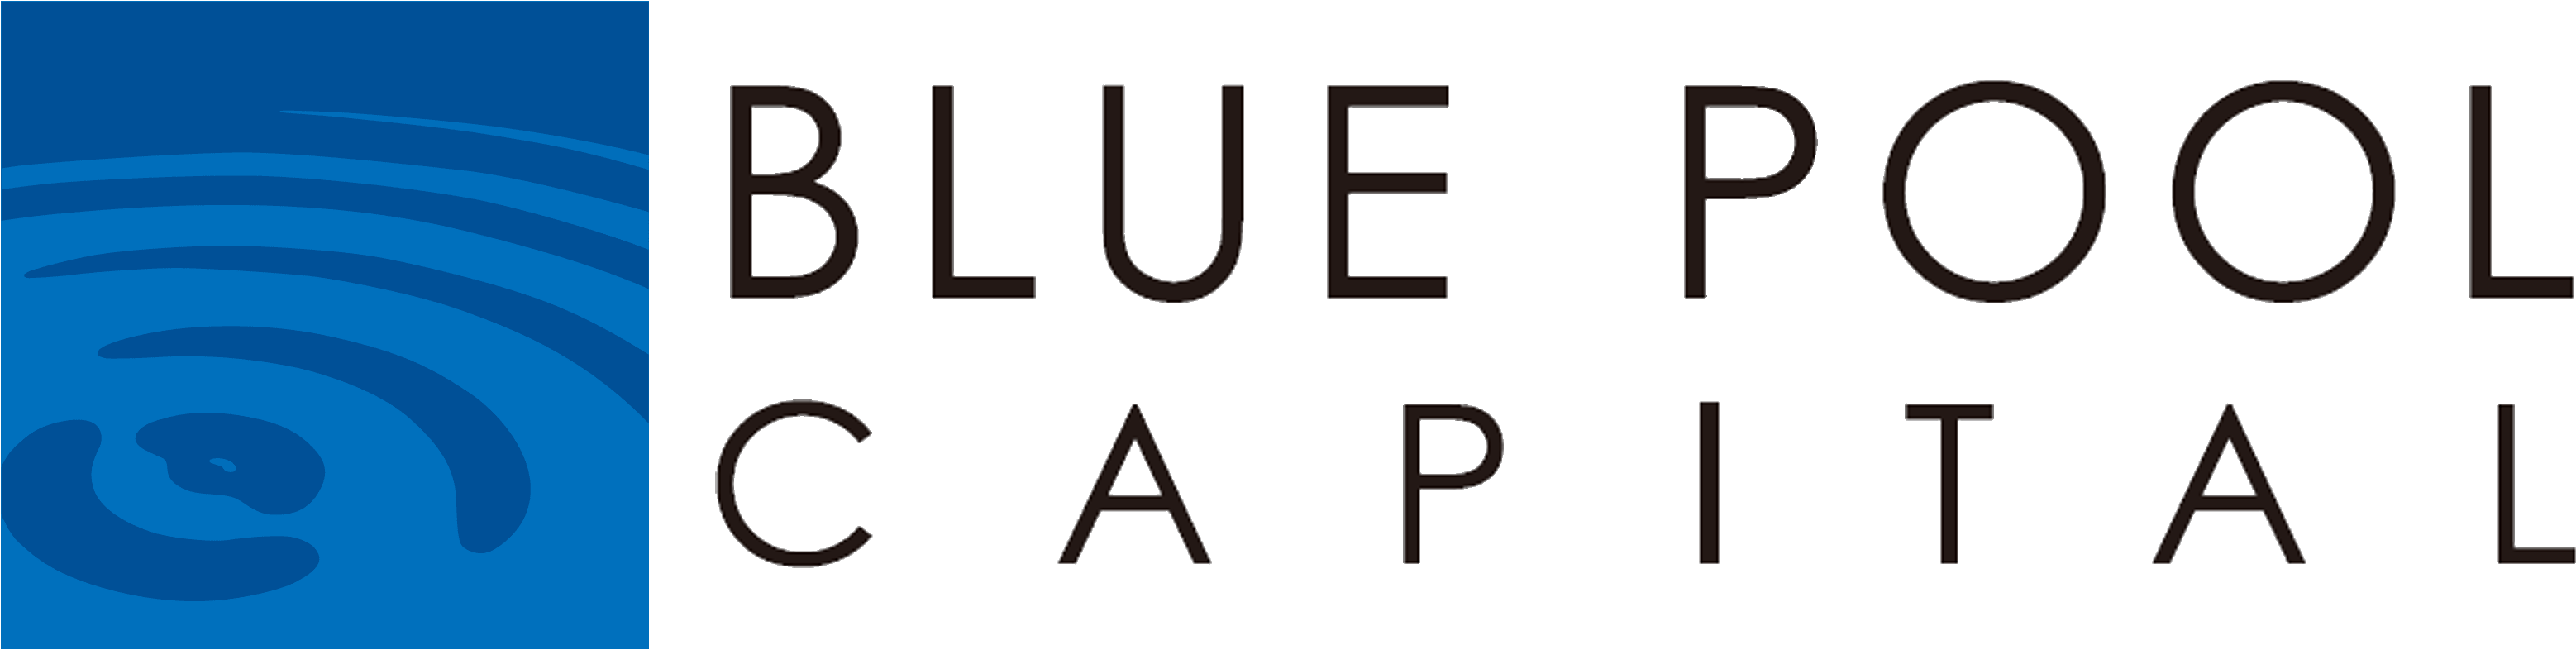 blue pool capital